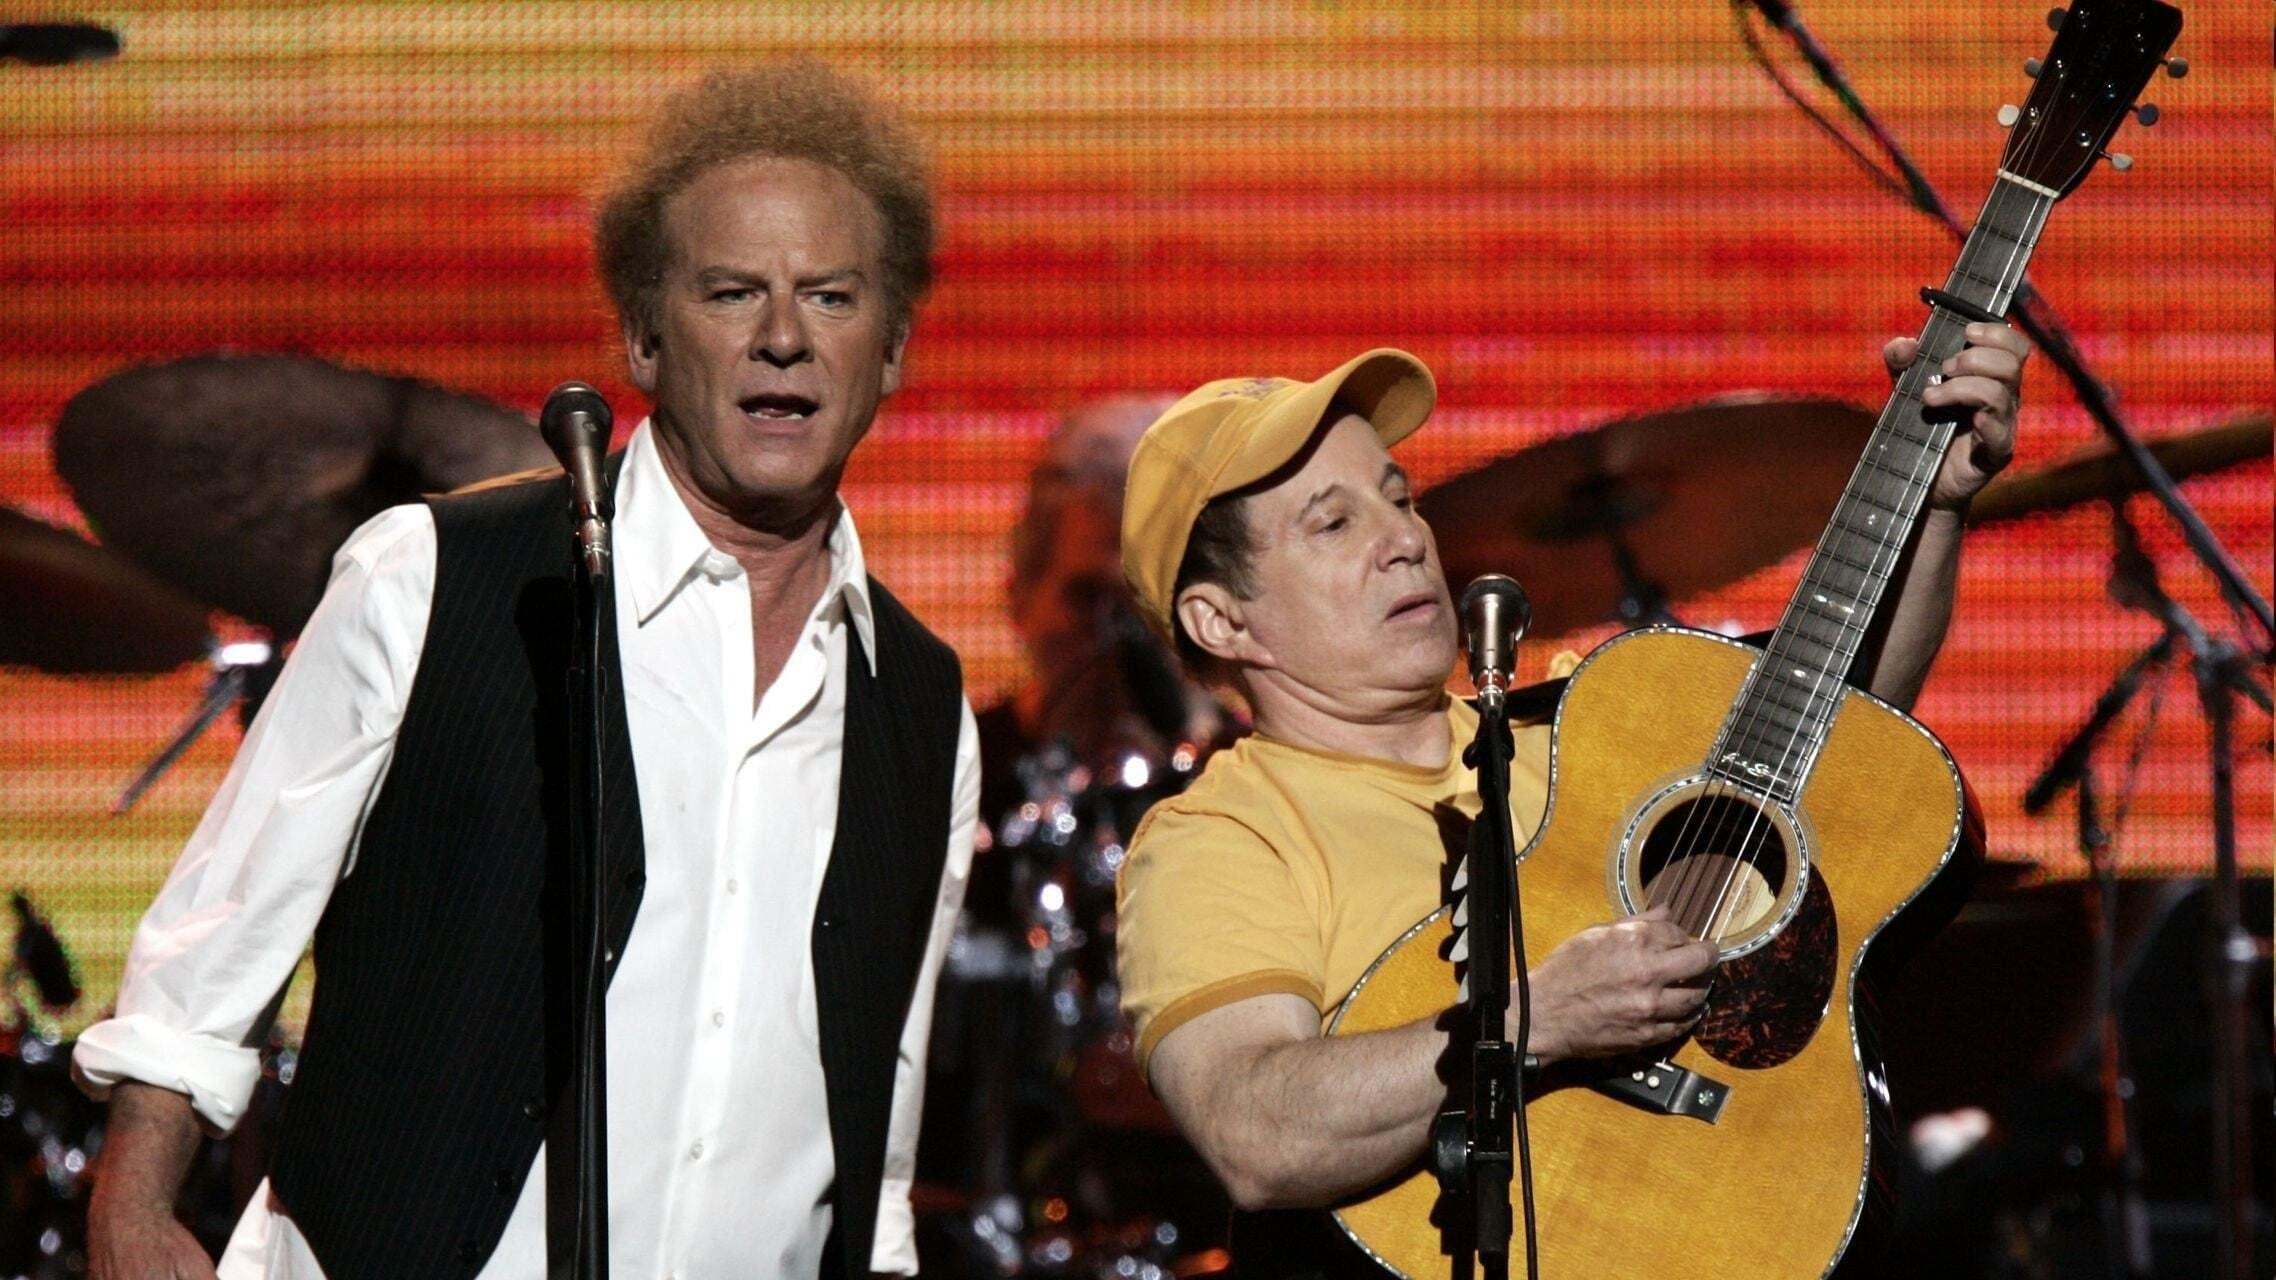 Simon & Garfunkel: Old Friends - Live On Stage backdrop